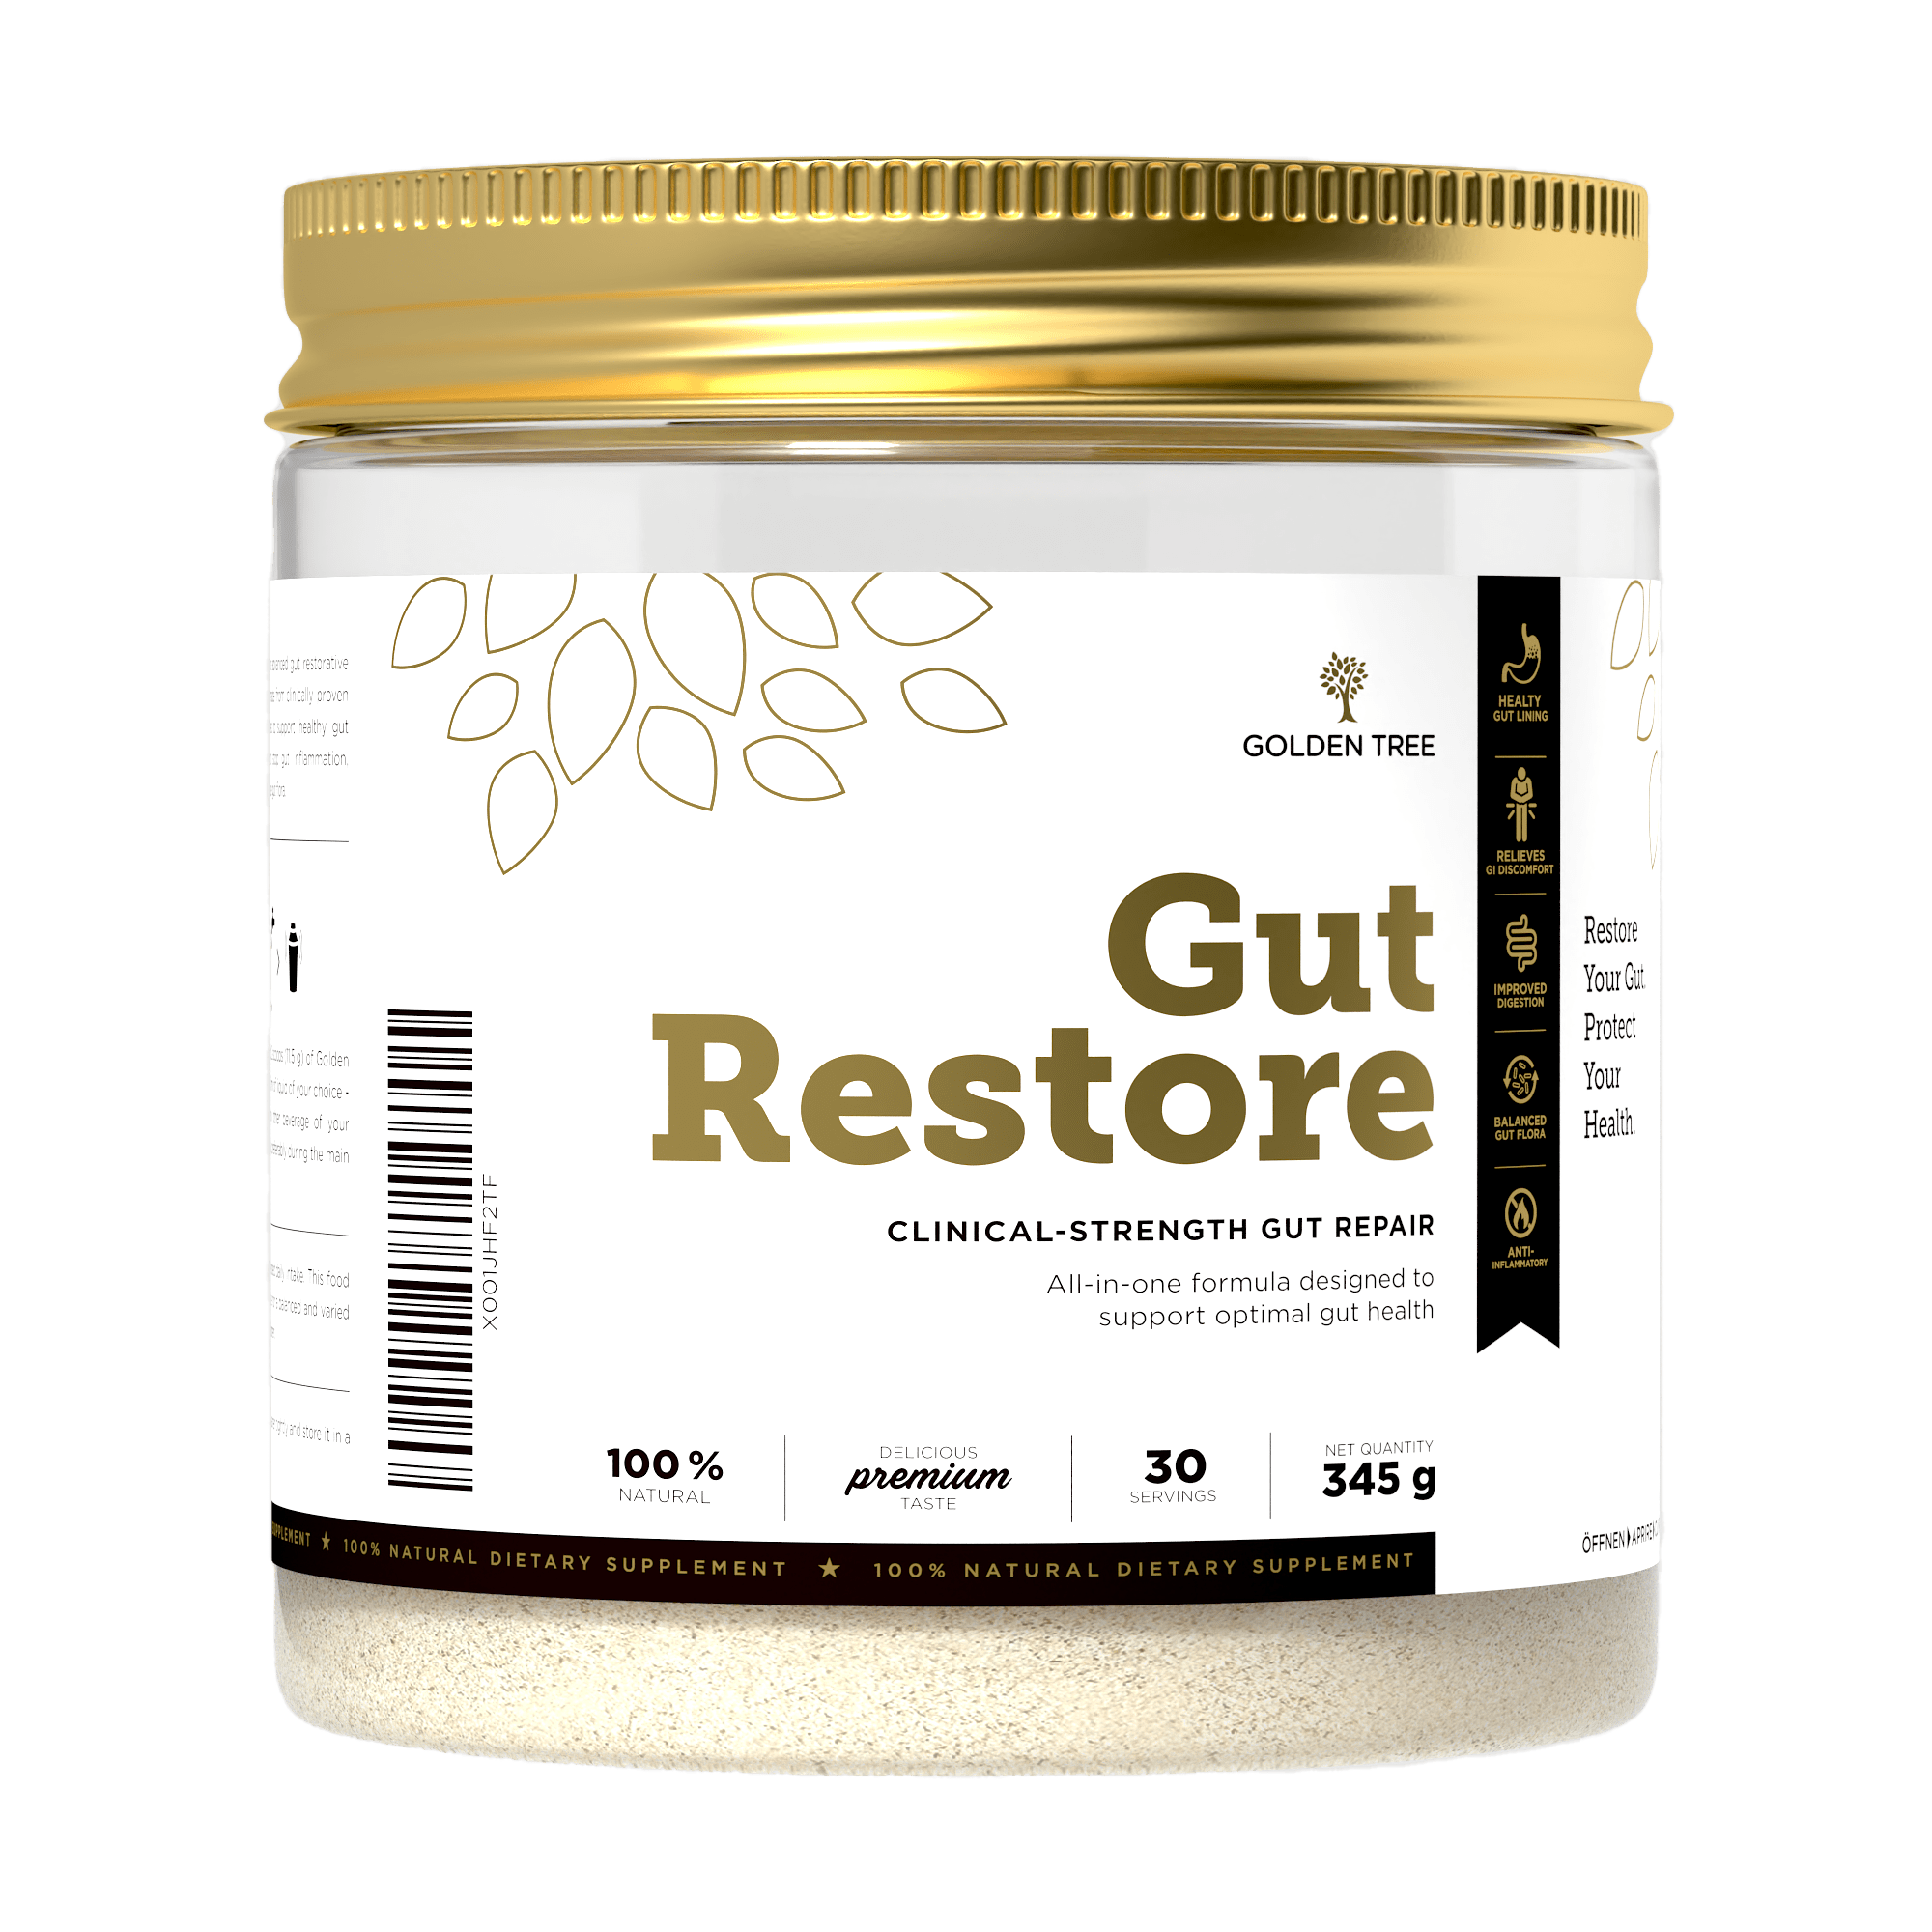 La bevanda Golden Tree Gut Restore contiene l’arabinogalattano